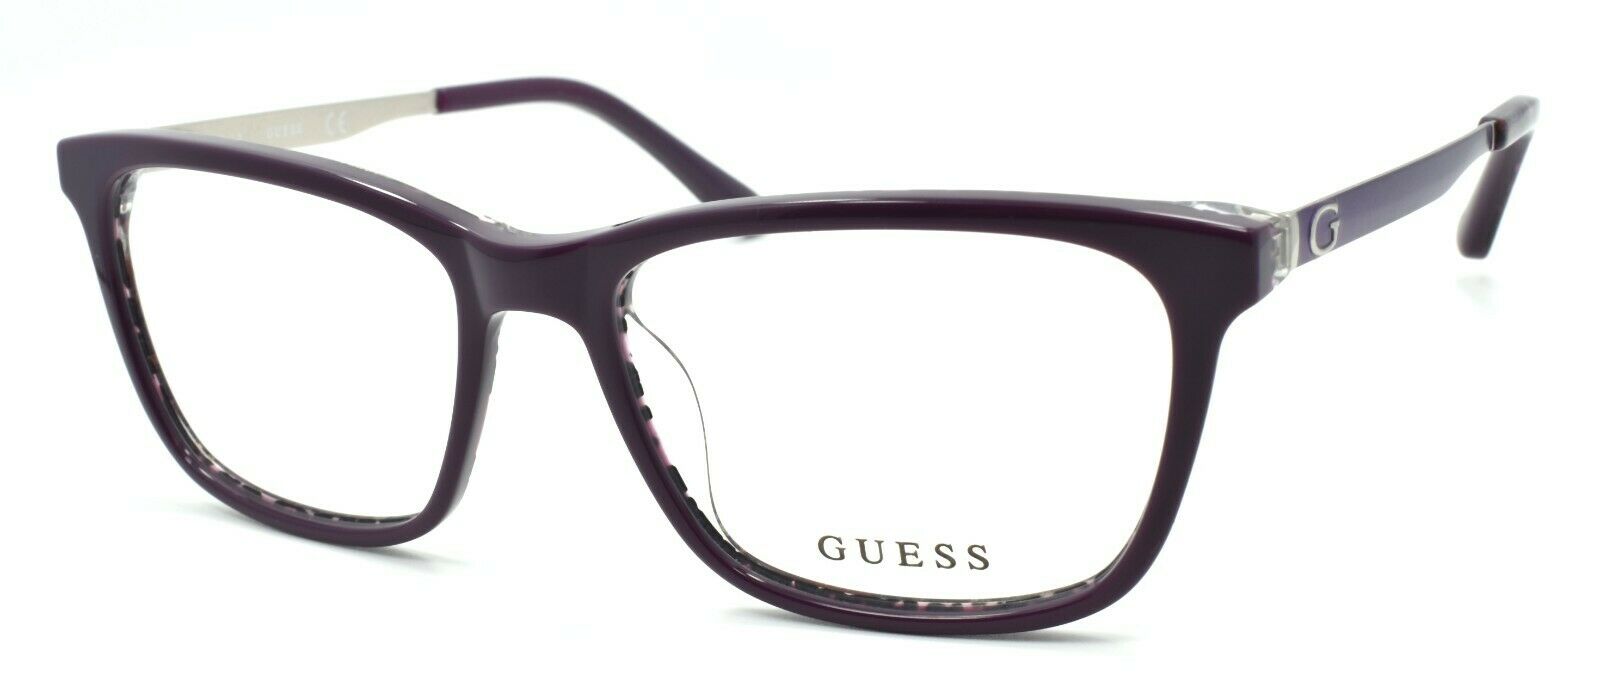 1-GUESS GU2630 083 Women's Eyeglasses Frames 52-16-135 Violet + CASE-664689872213-IKSpecs